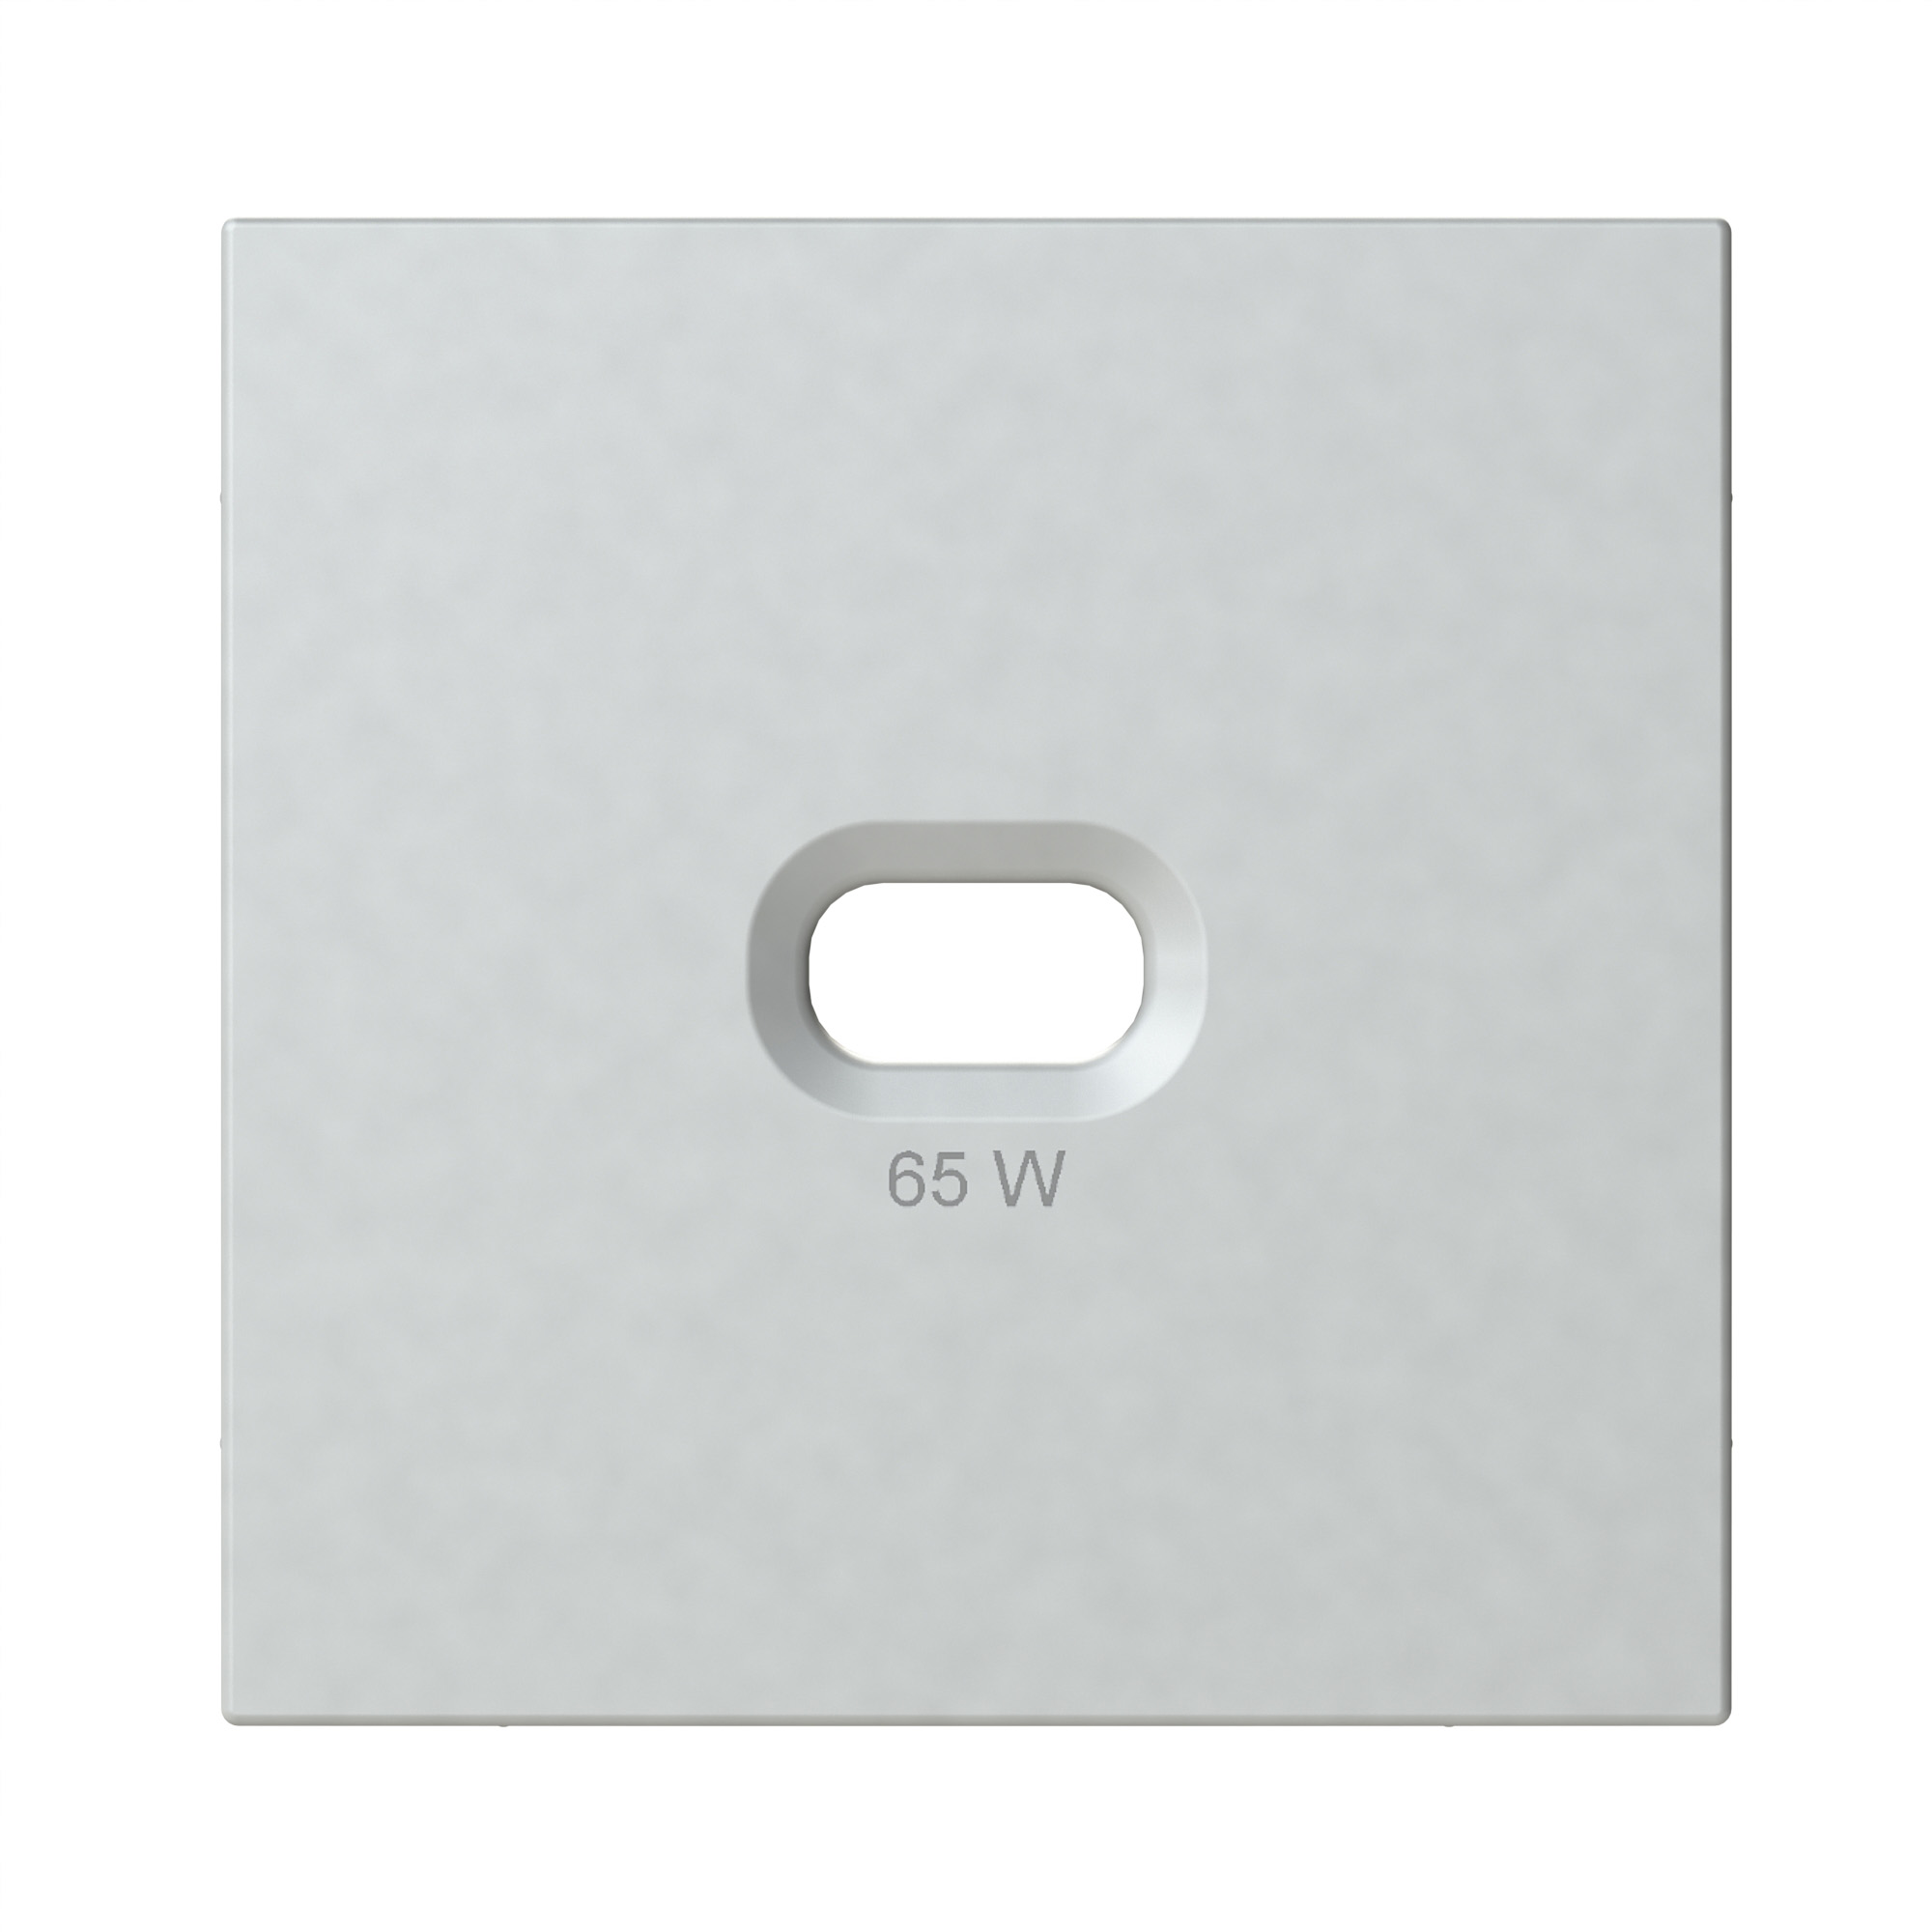 Abdeckplatte für USB-C Steckdose 65 W alu-silber-seidenglanz OPUS 55